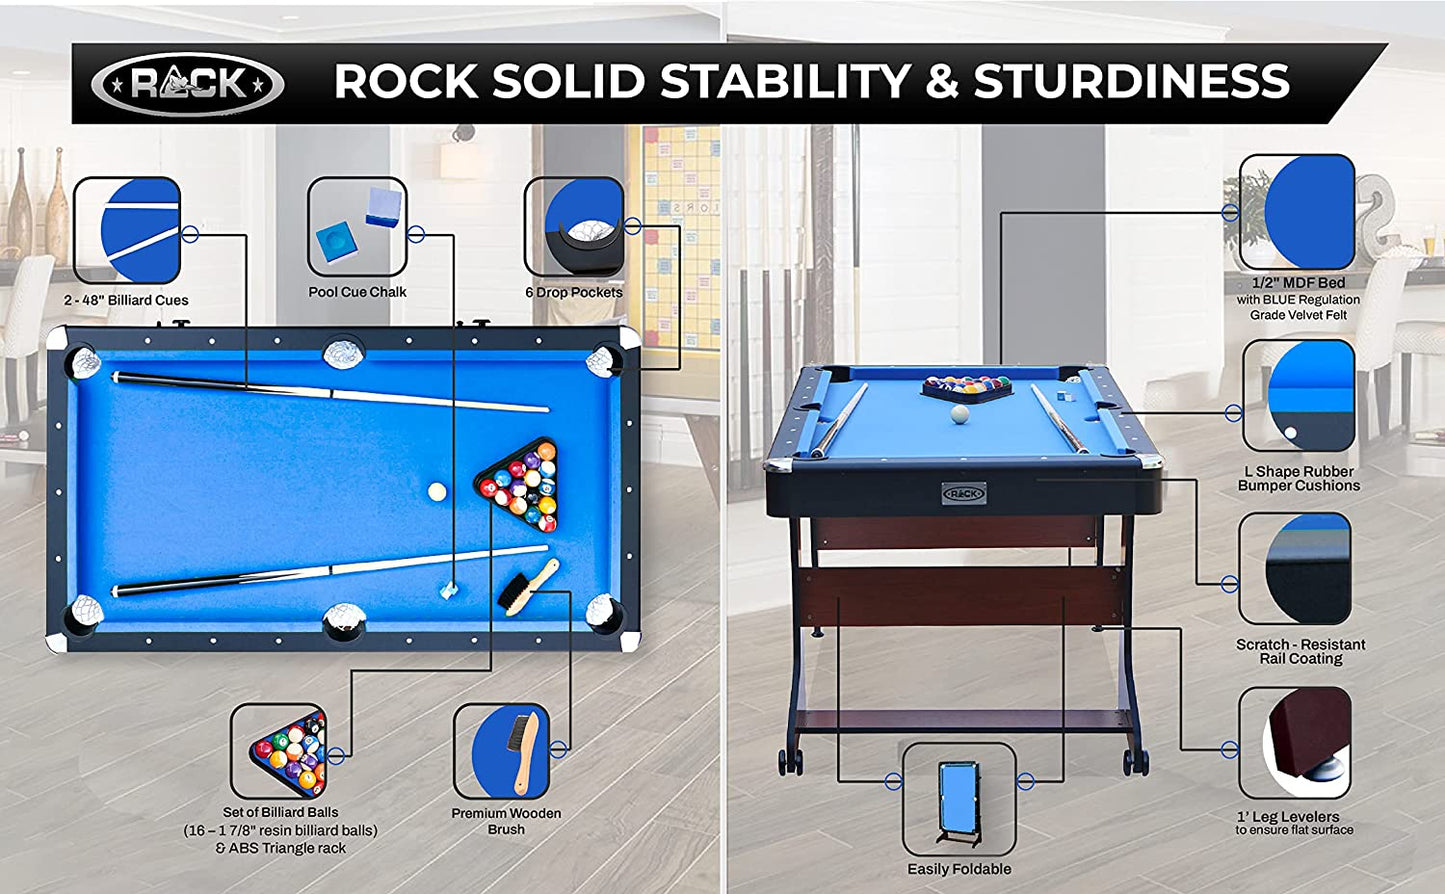 Drogon 5.5-Foot Folding Billiard/Pool Table - Compact and Portable Space-Saving Design